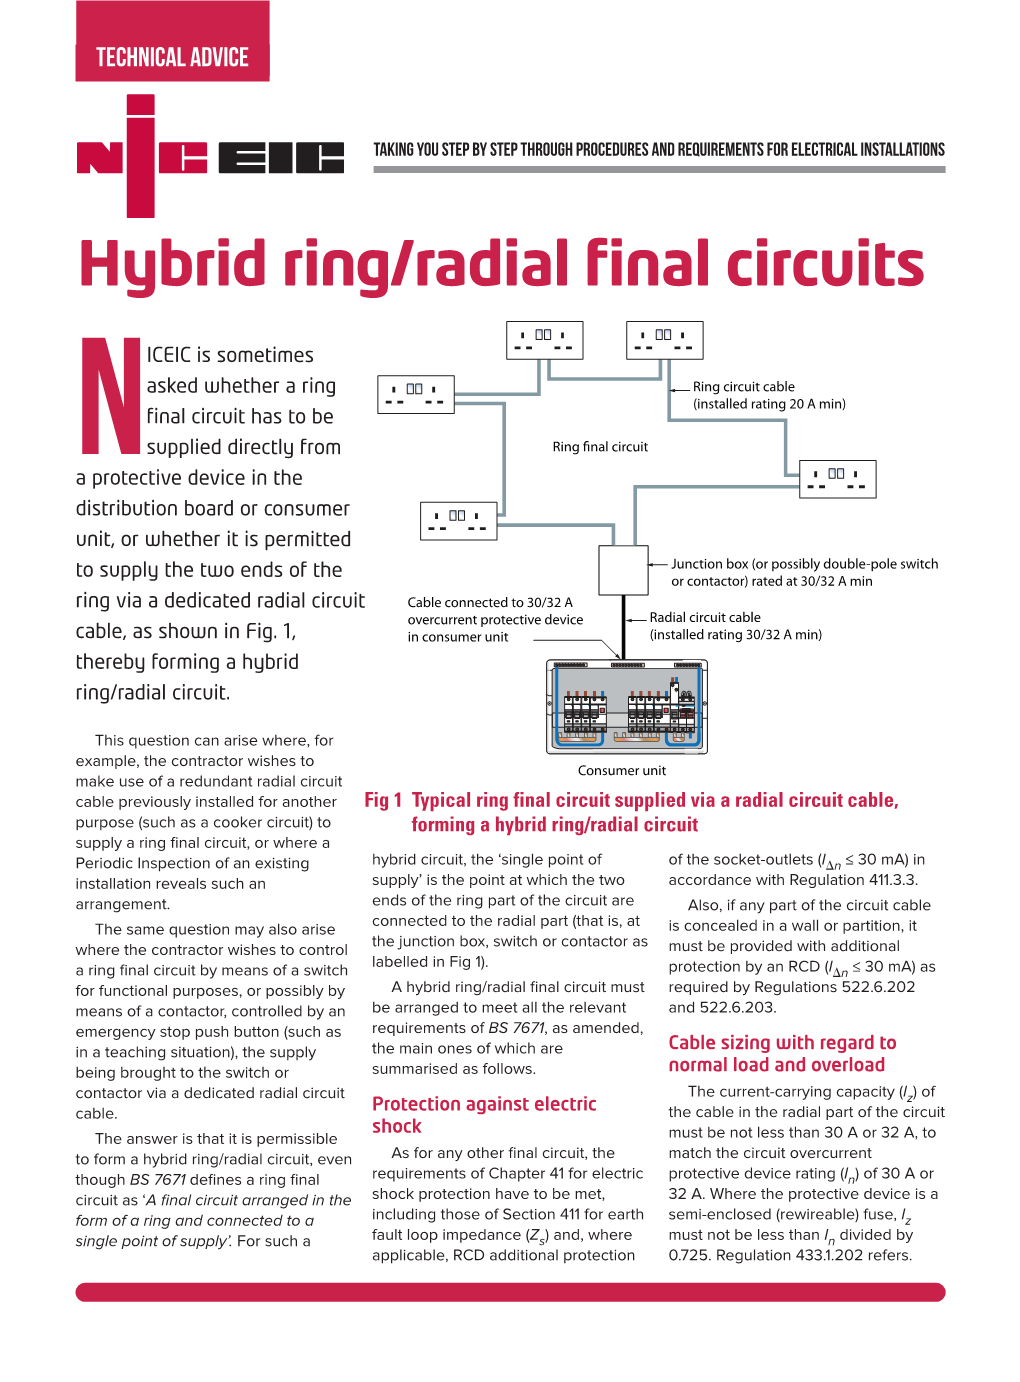 Hybrid Ring/Radial Final Circuits